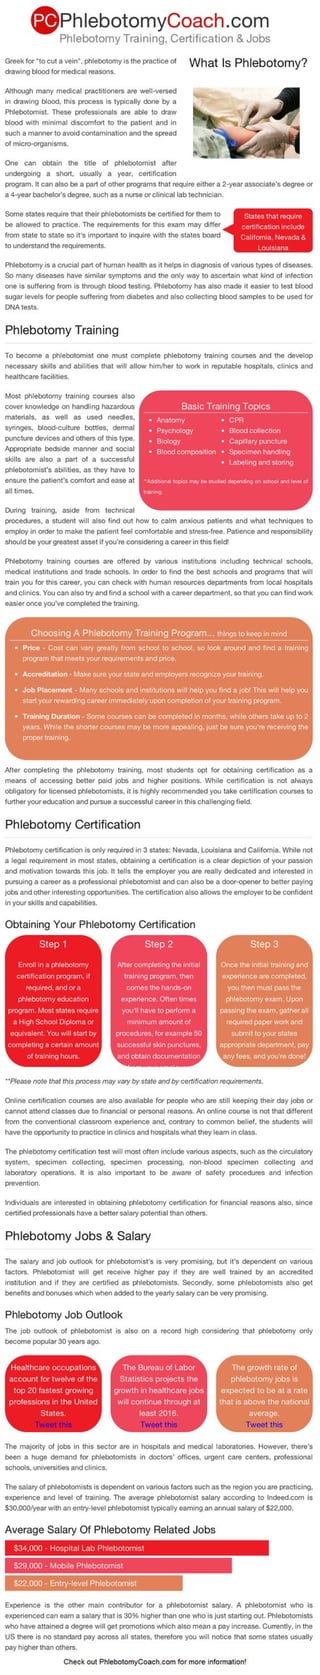 Phlebotomy Training Information